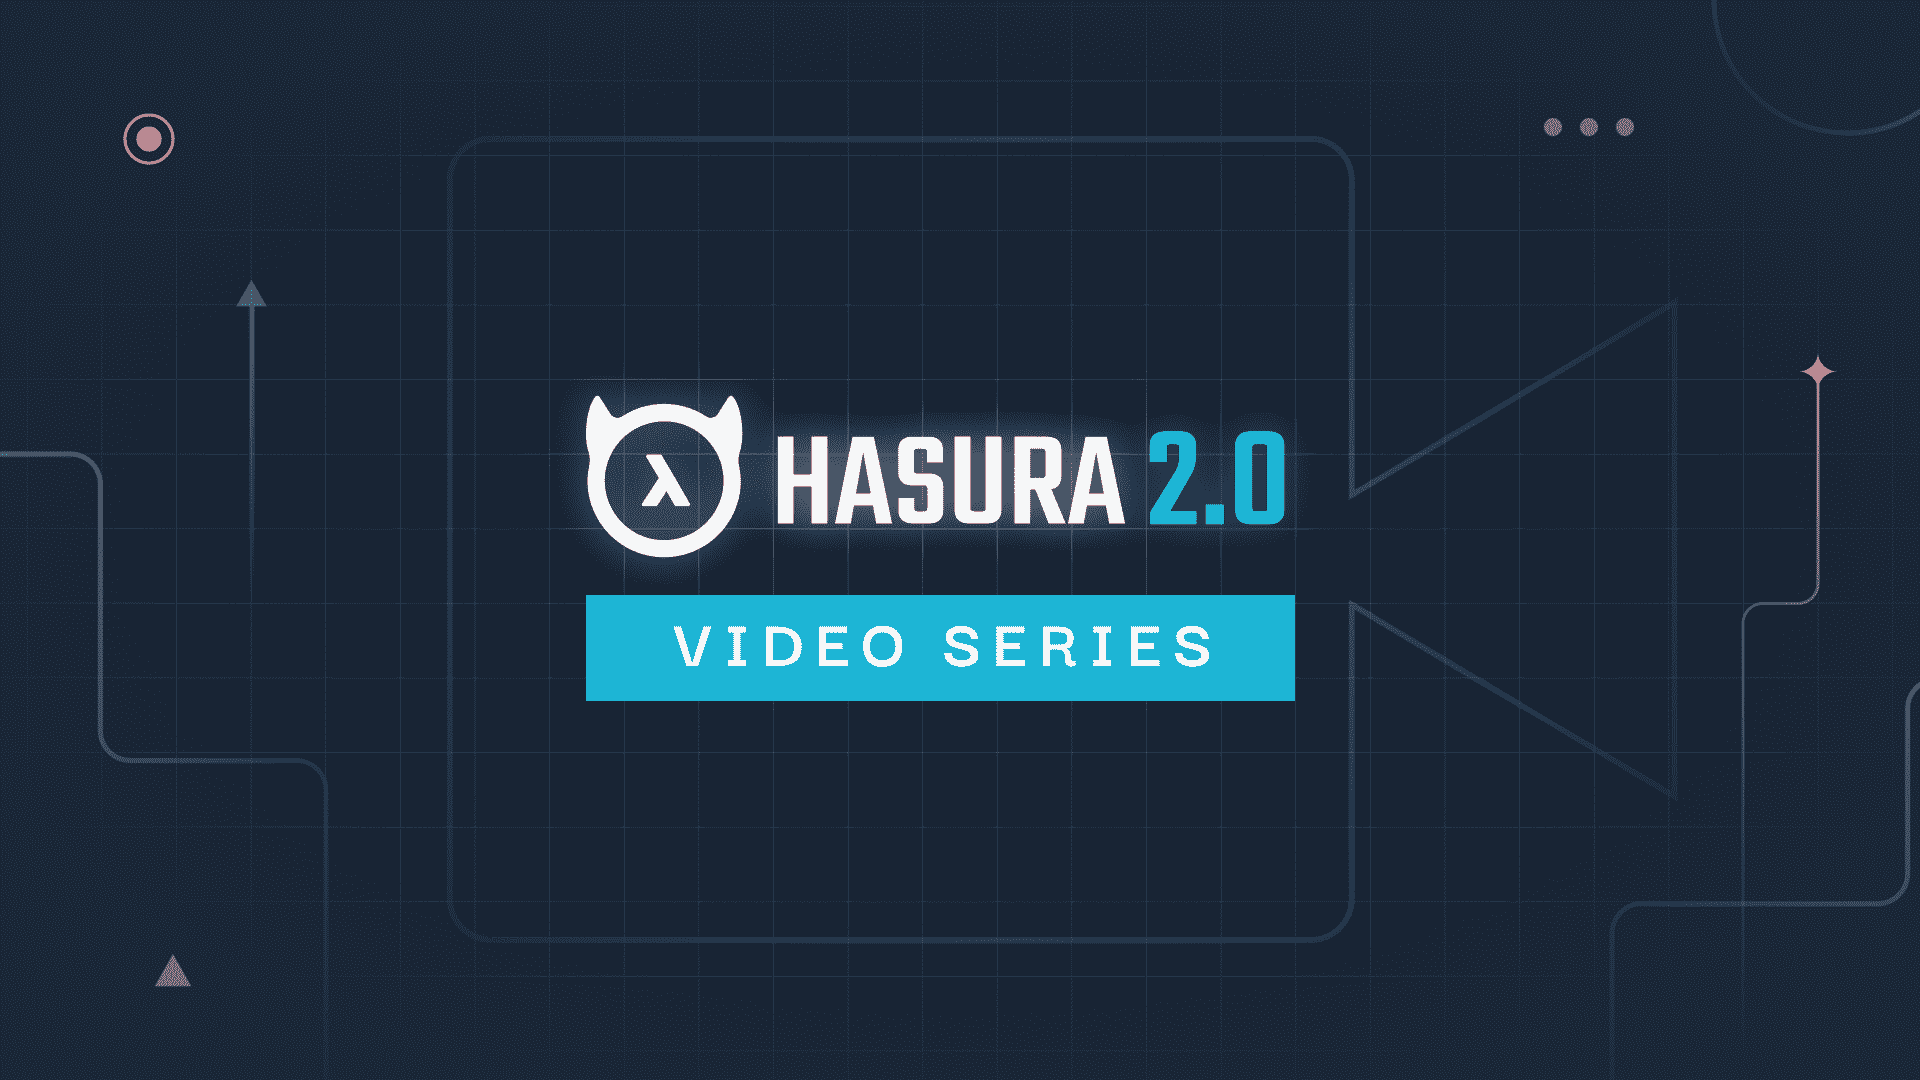 Hasura 2.0 Video Series